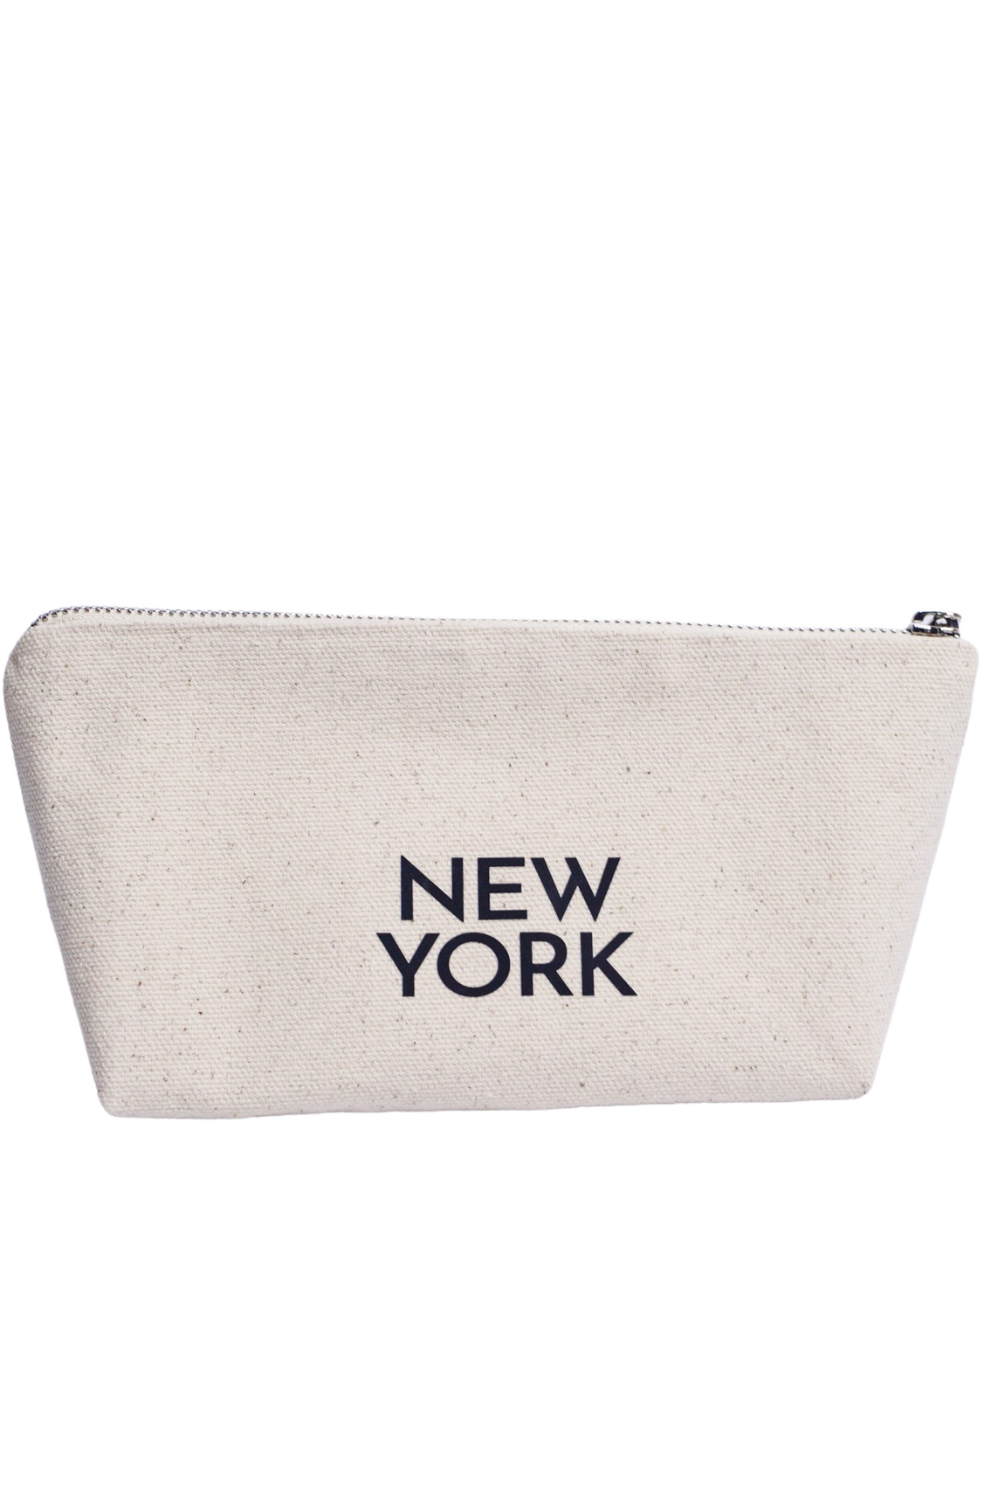 Eco-cotton cosmetic bag white M New York 02SM01